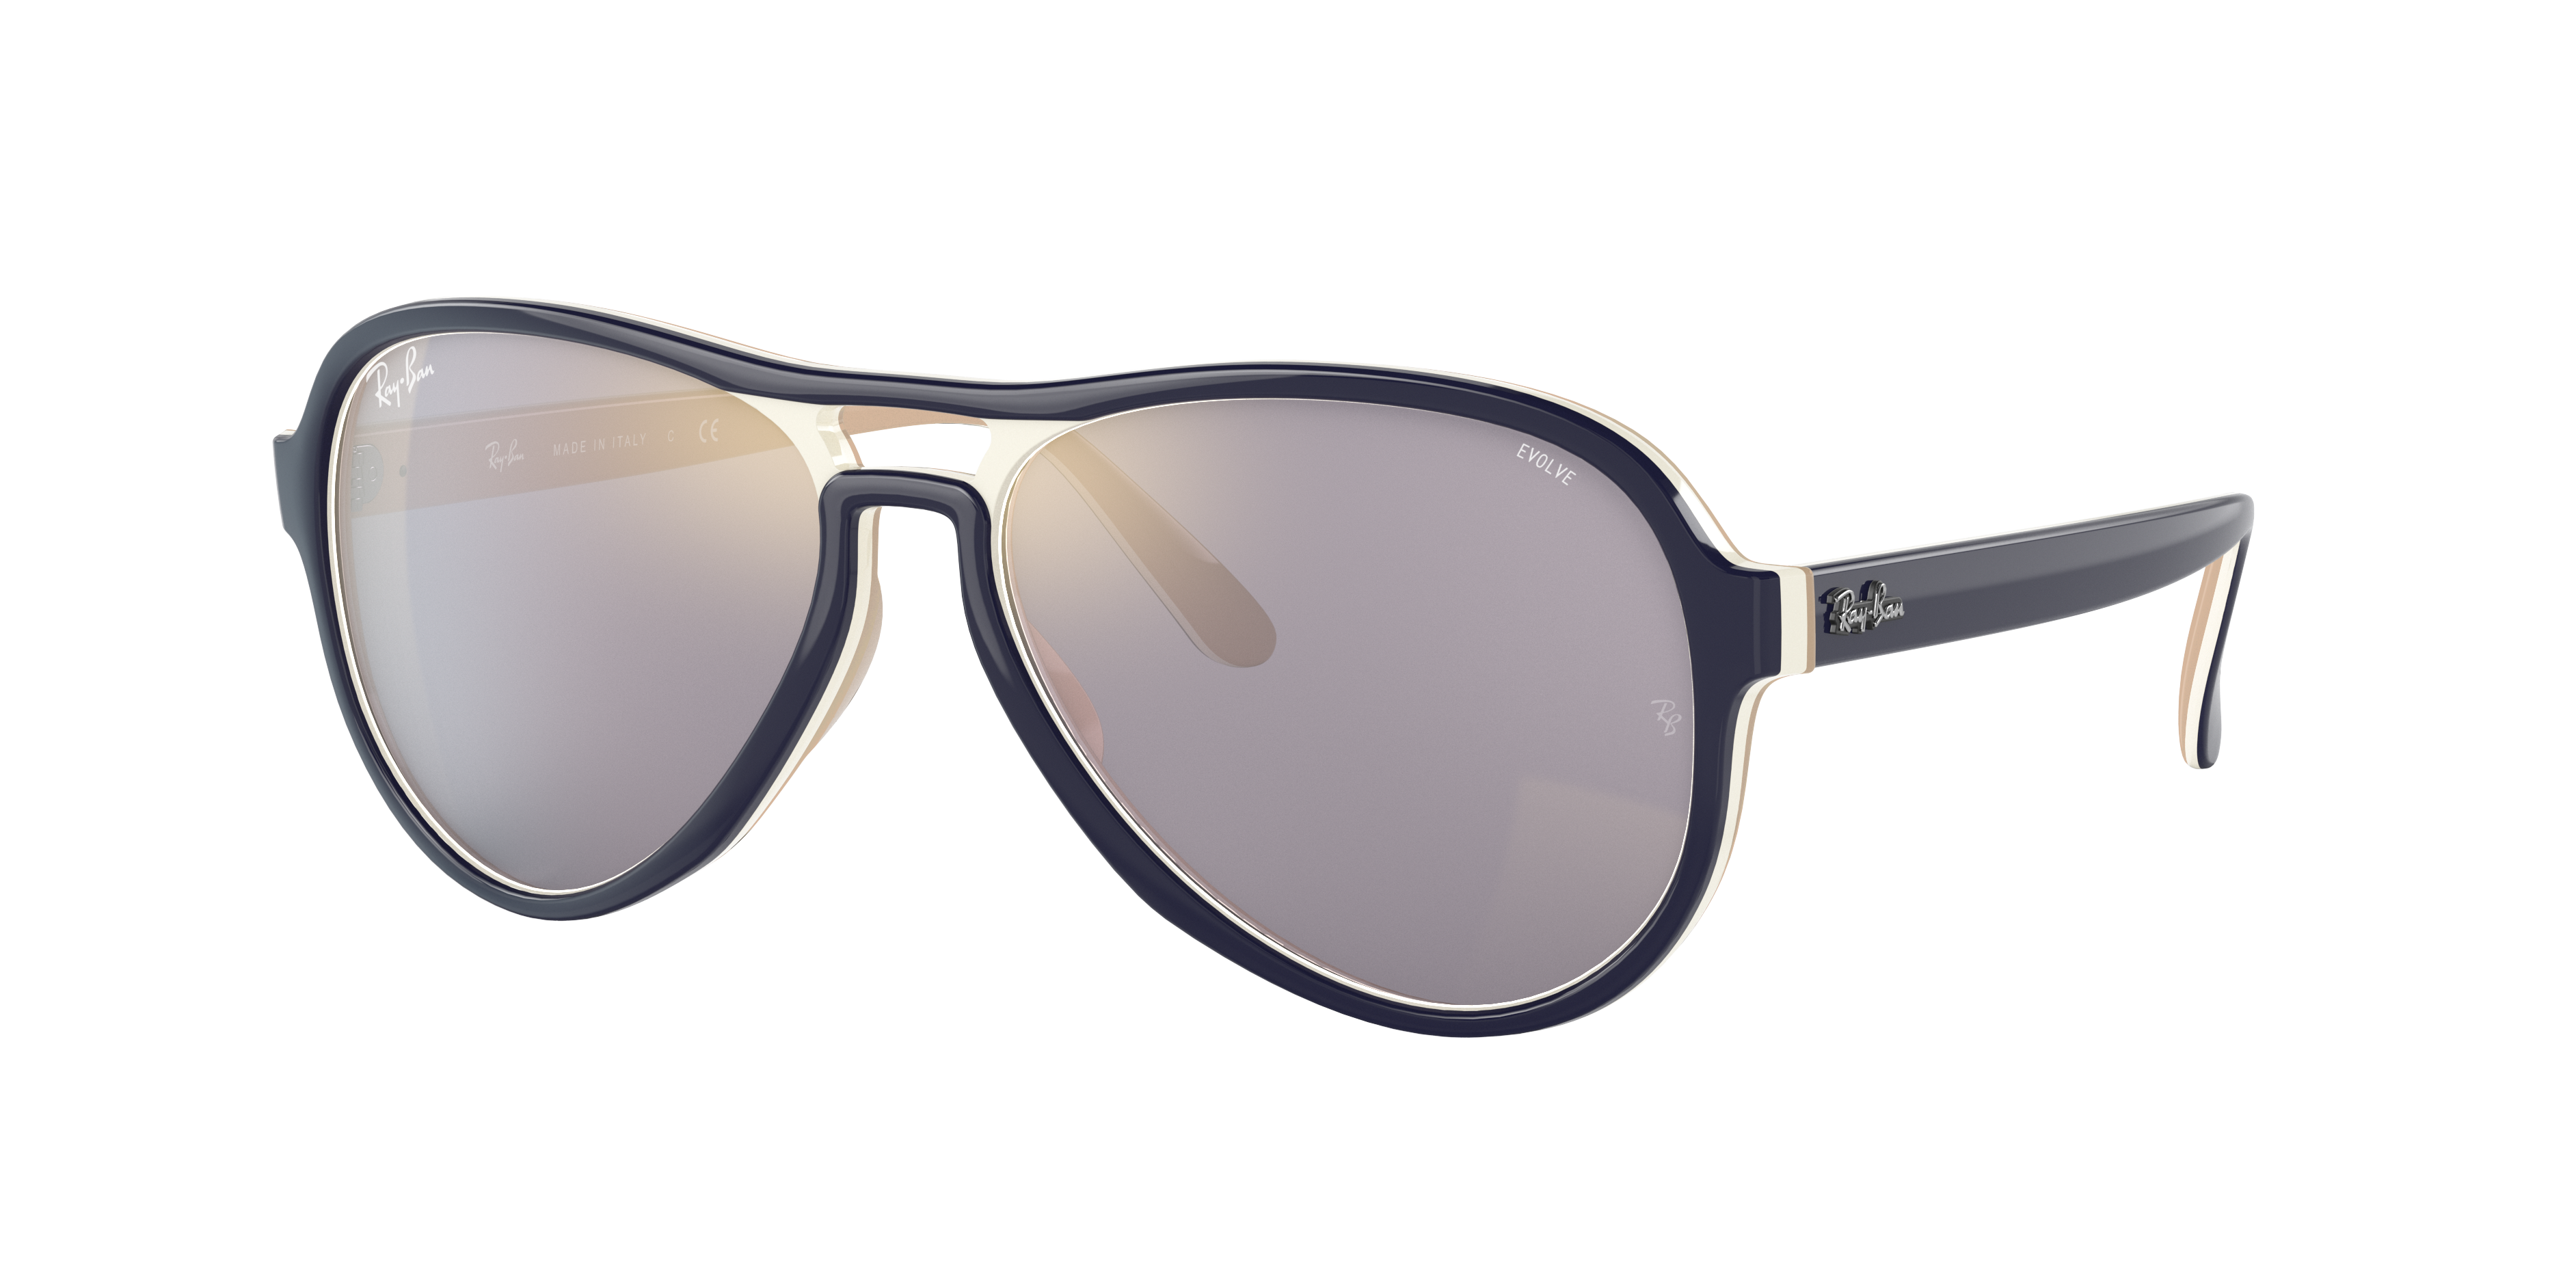 Vagabond Mirror Evolve Sunglasses in Blue and Dark Grey/Gold Photochromic |  Ray-Ban®